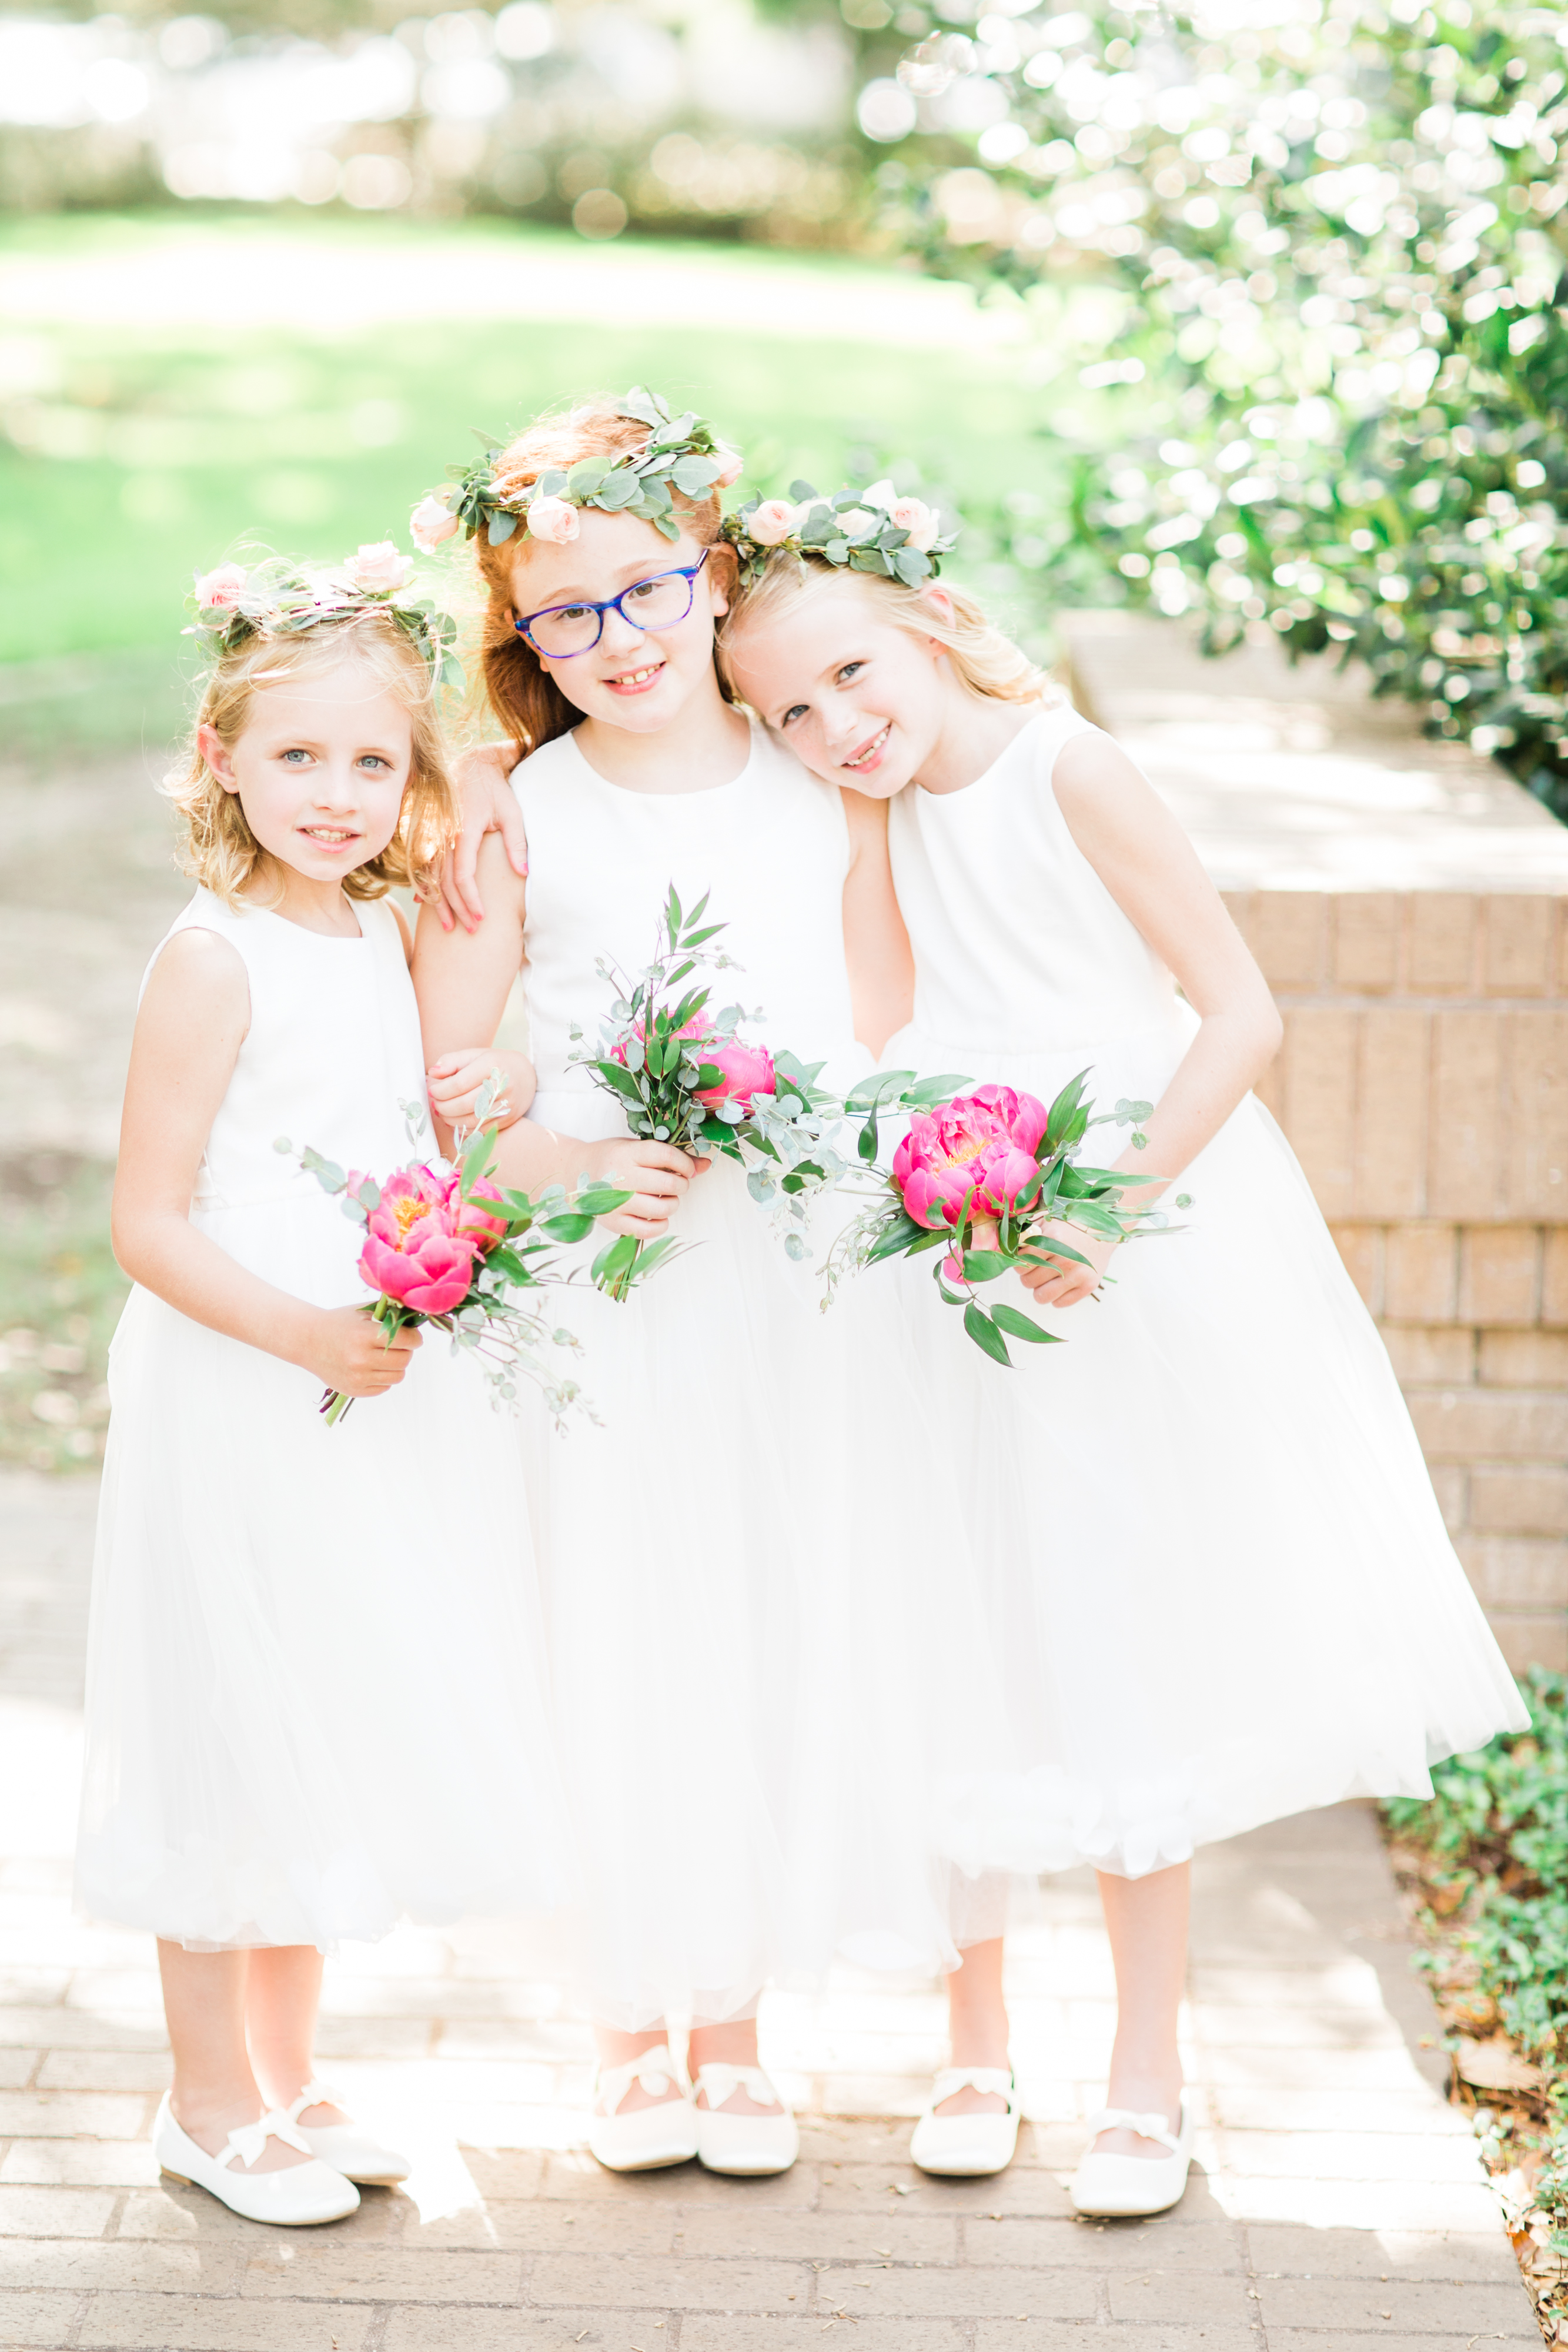 DFW Wedding Florist: A Stylish Soiree | Kristin + Michael Wedding Flowers